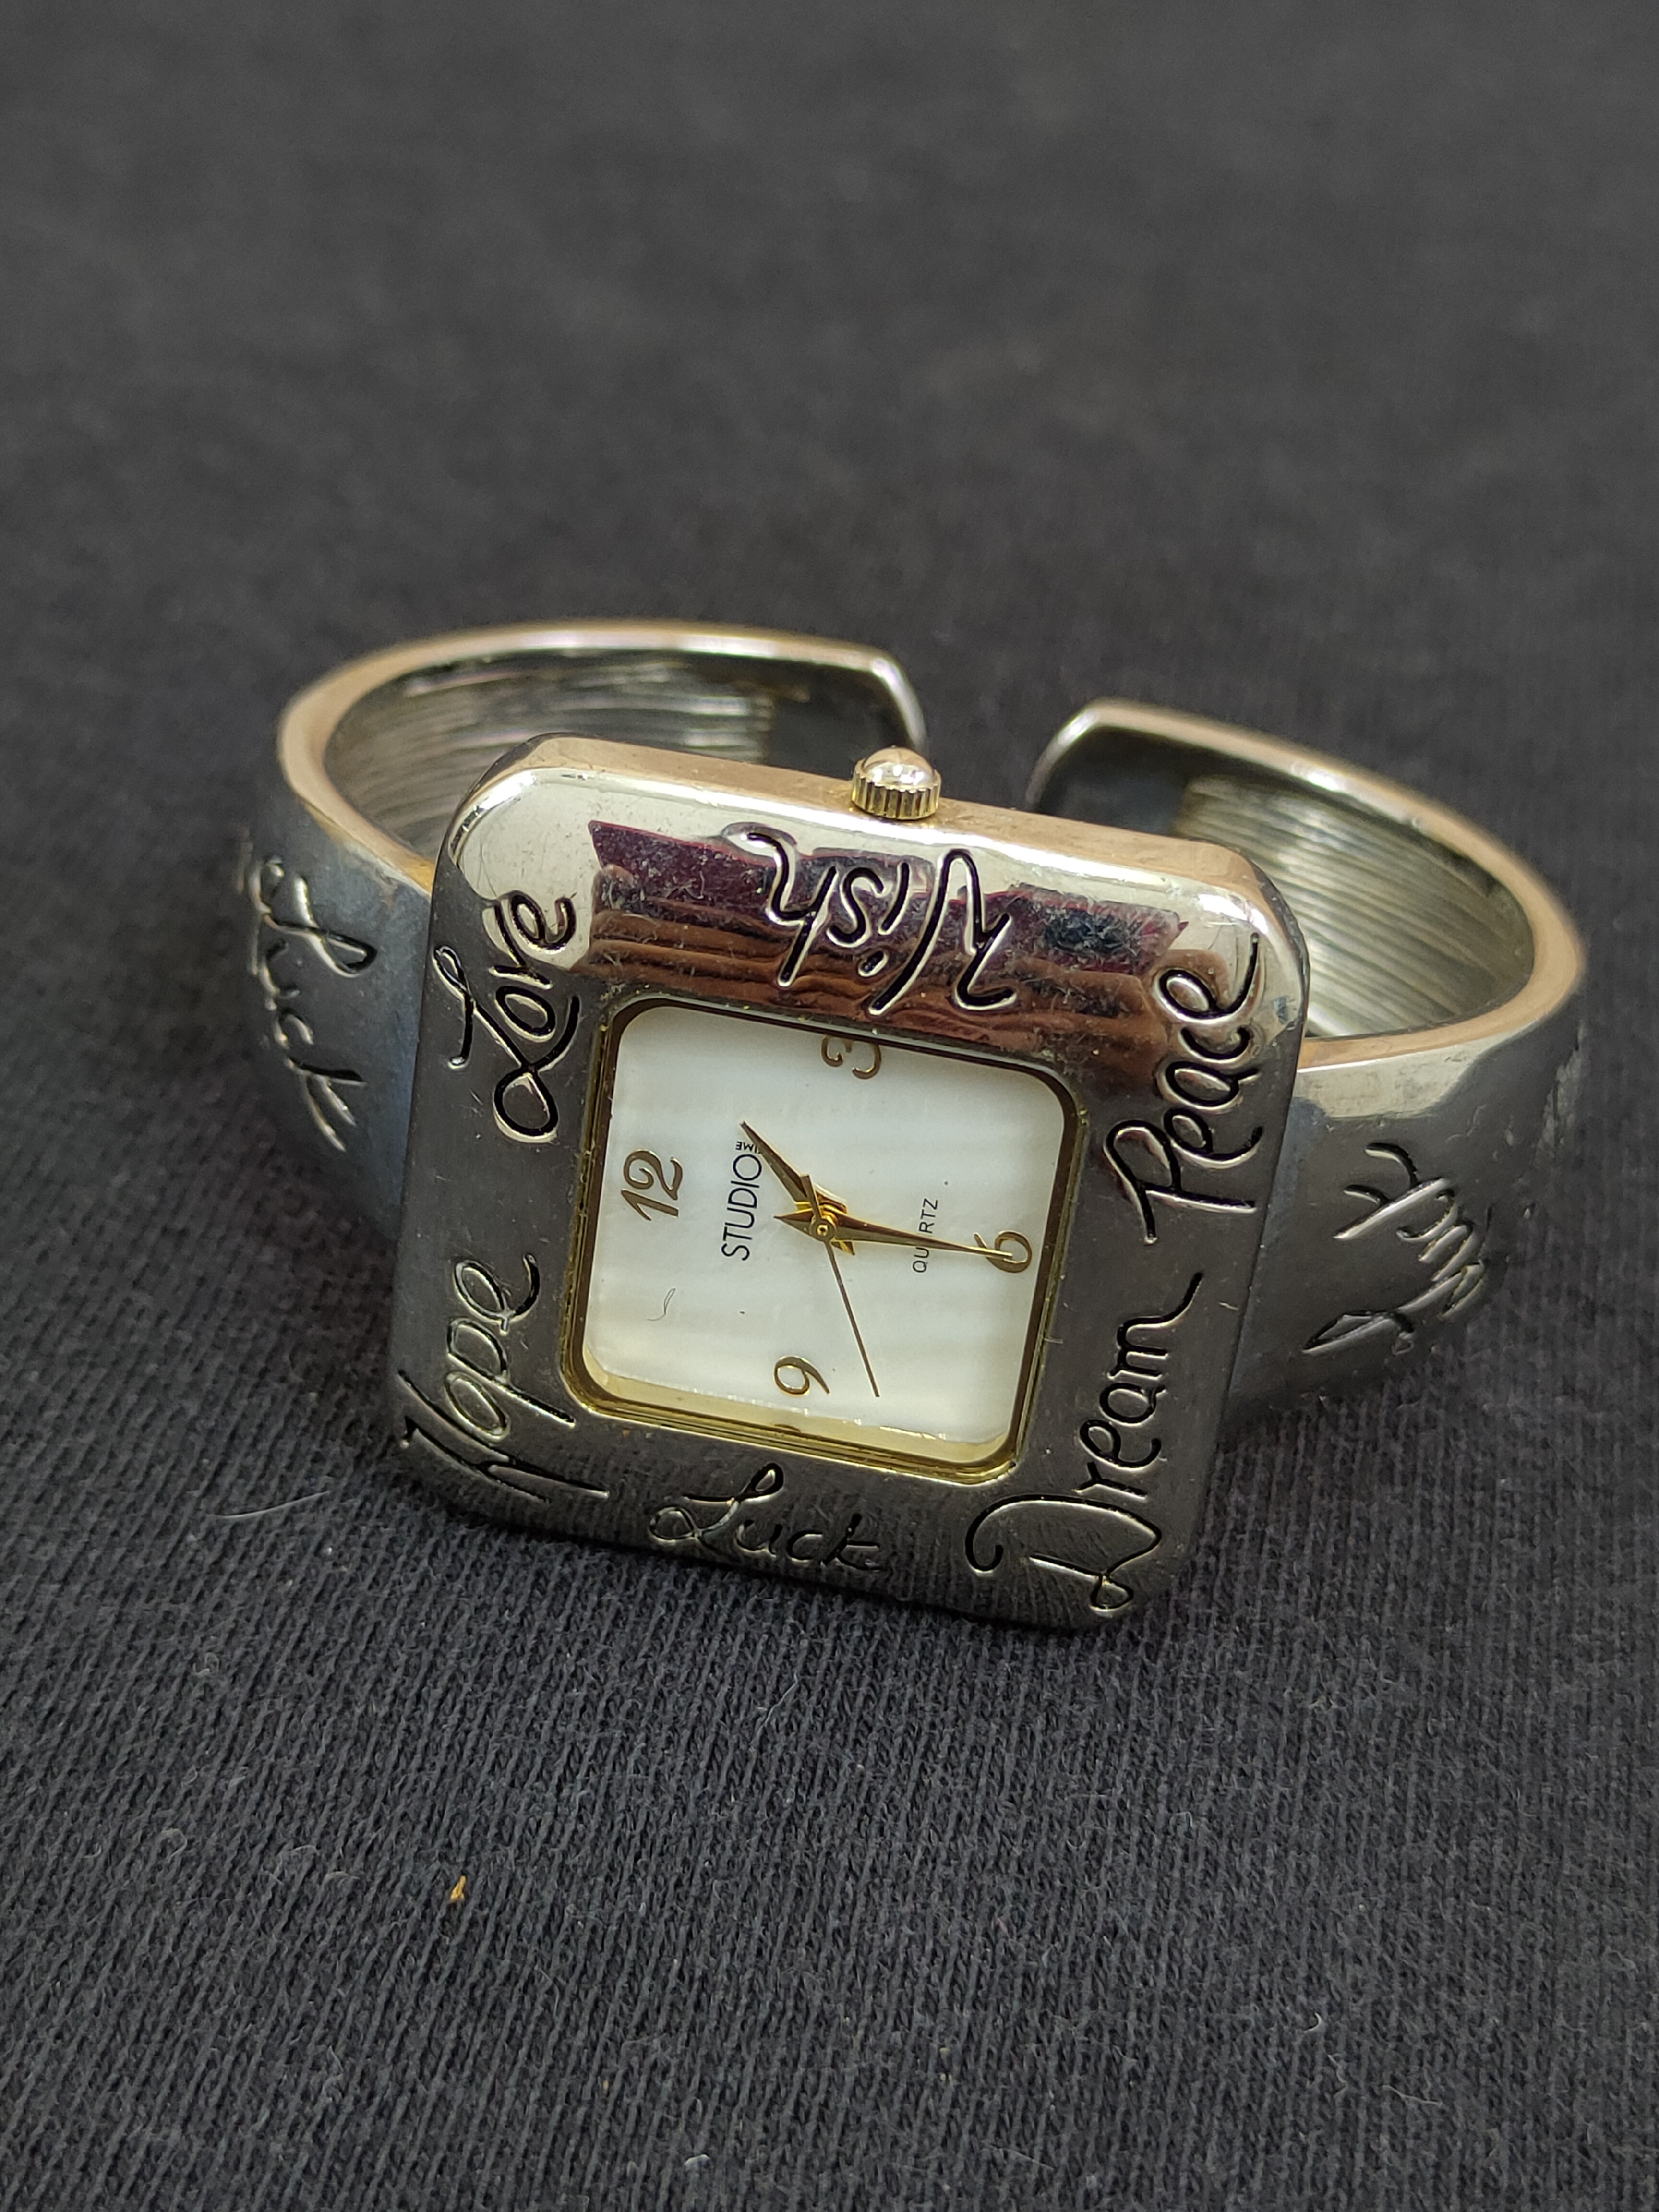 Japanese Brand - Studio Time watch like bracelet art design - 1